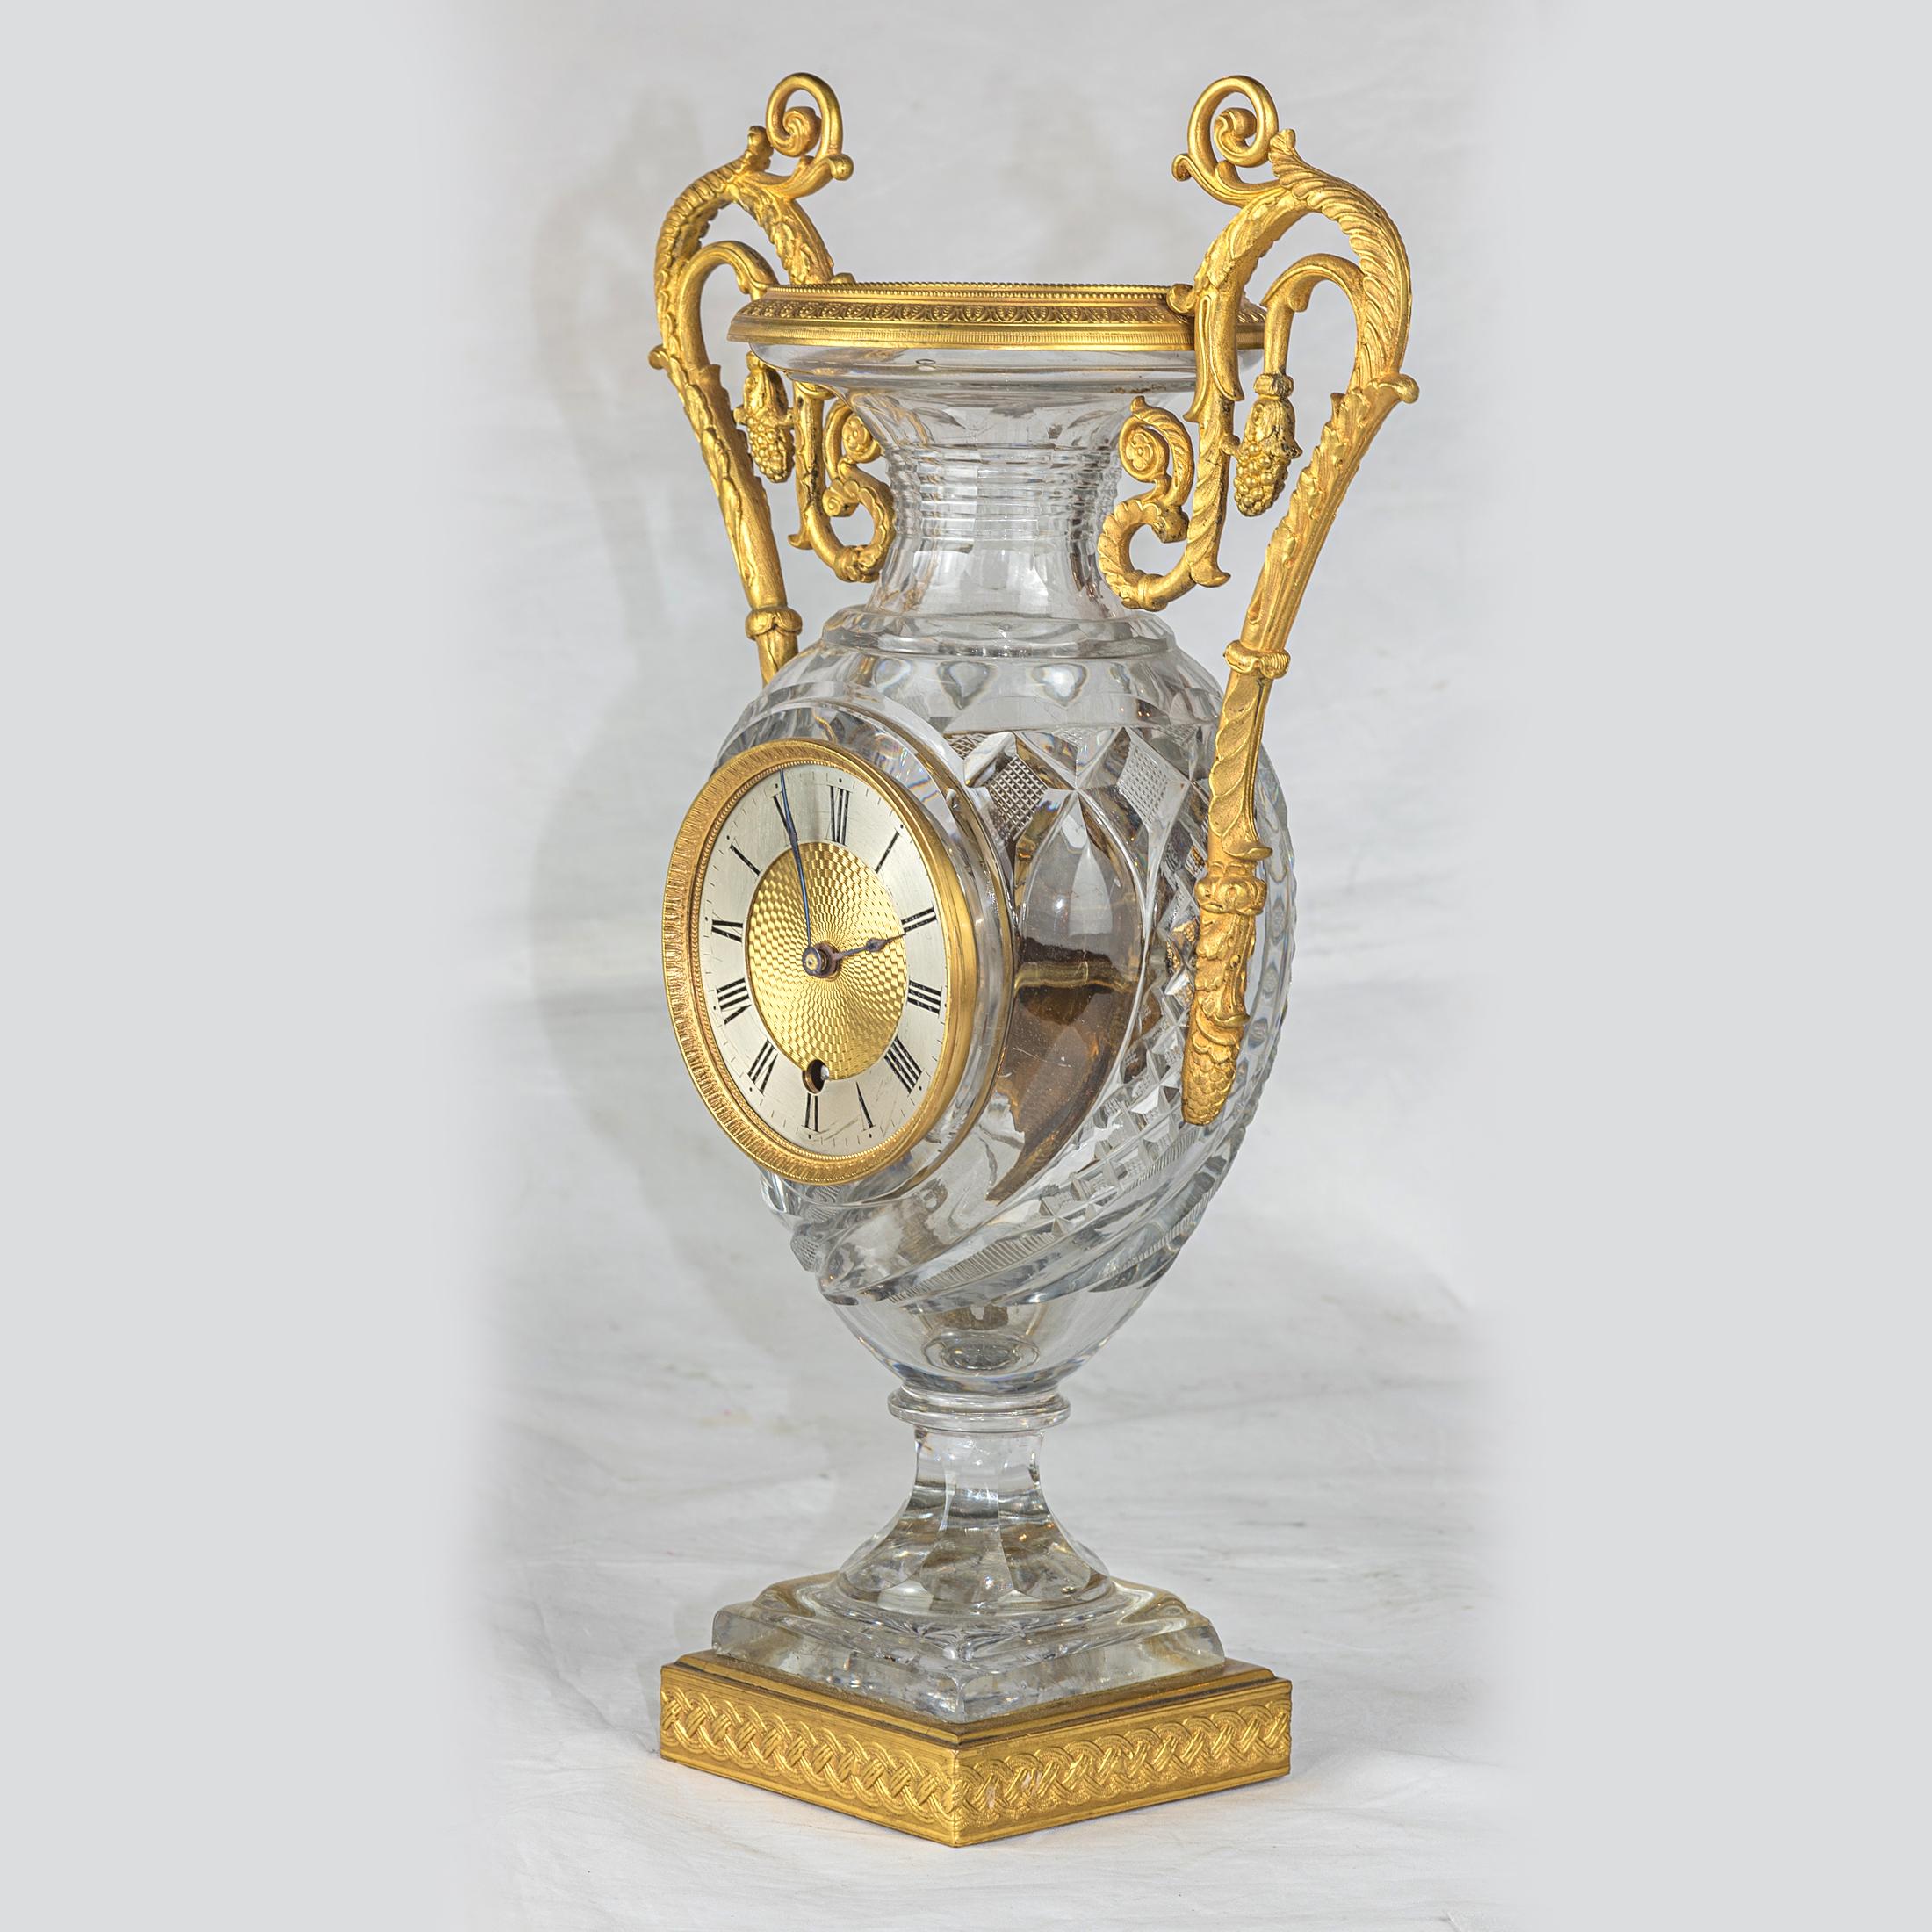 Medici vase-shaped cut crystal clock, ormolu mounted. Two gilt handles with foliage.

Origin: French
Date: circa 1810
Dimension: 14 x 8 3/4 x 4 1/4 inches